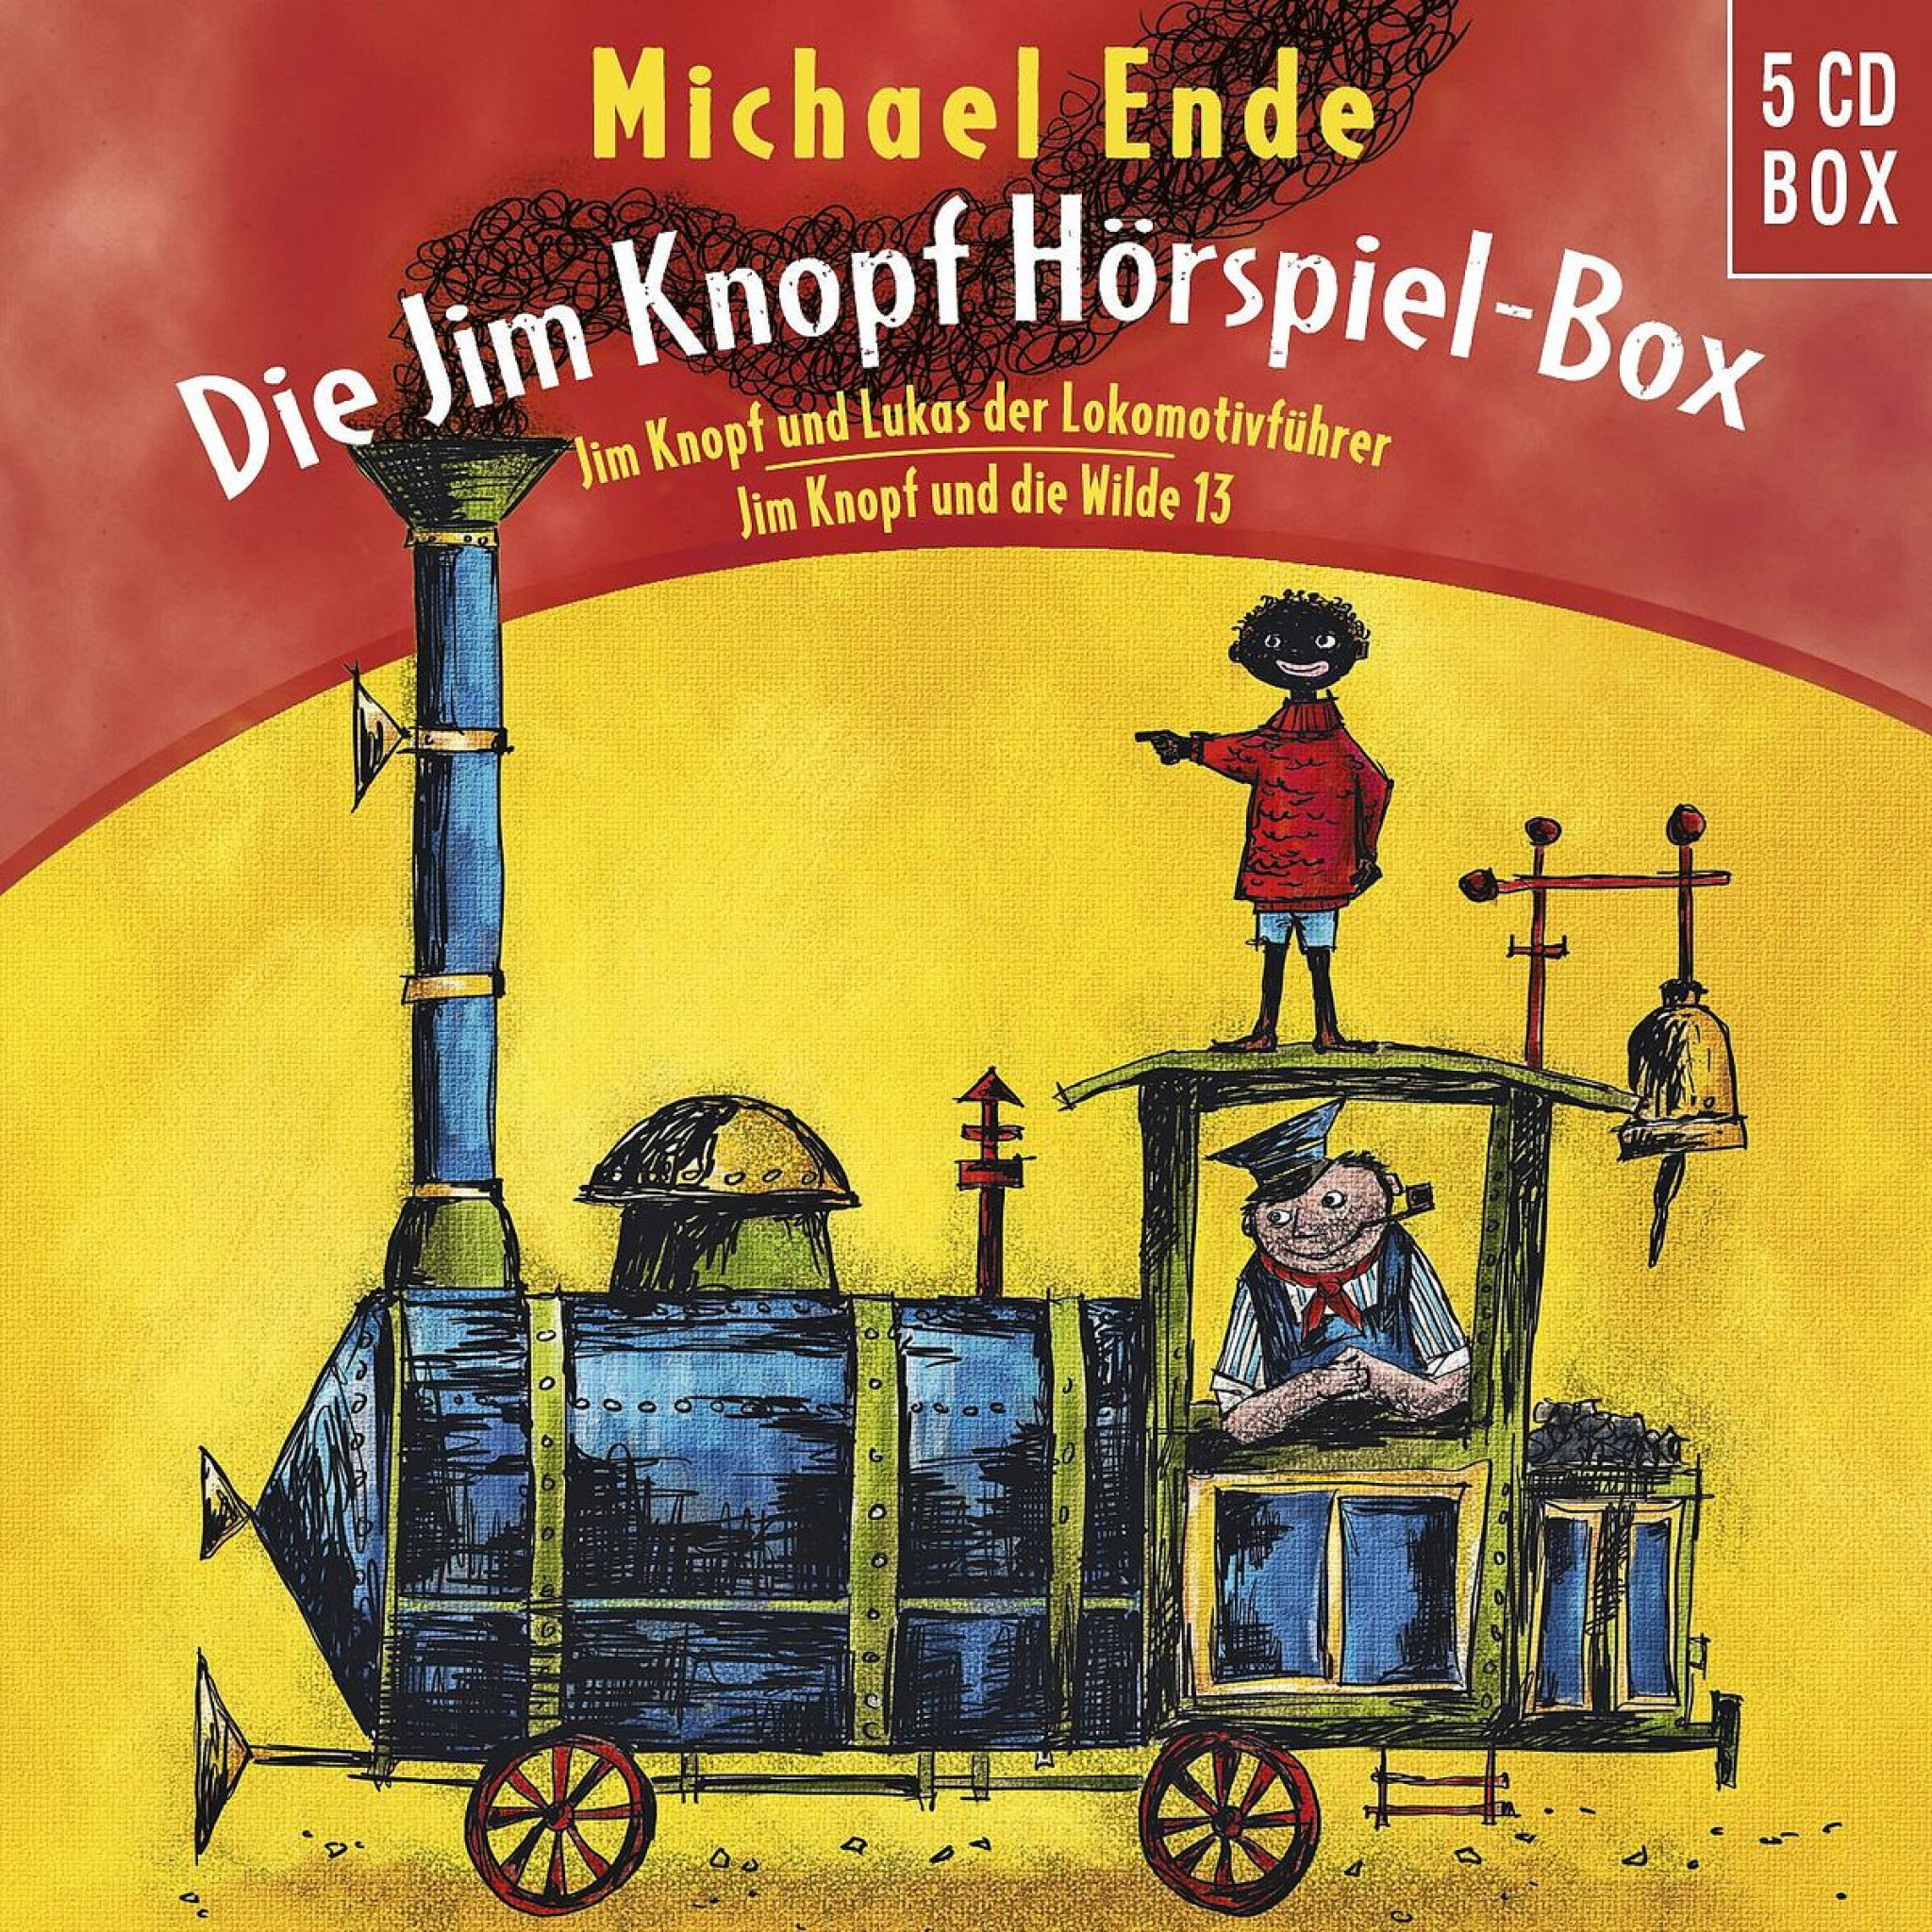 Die Jim Knopf Hörspiel-Box